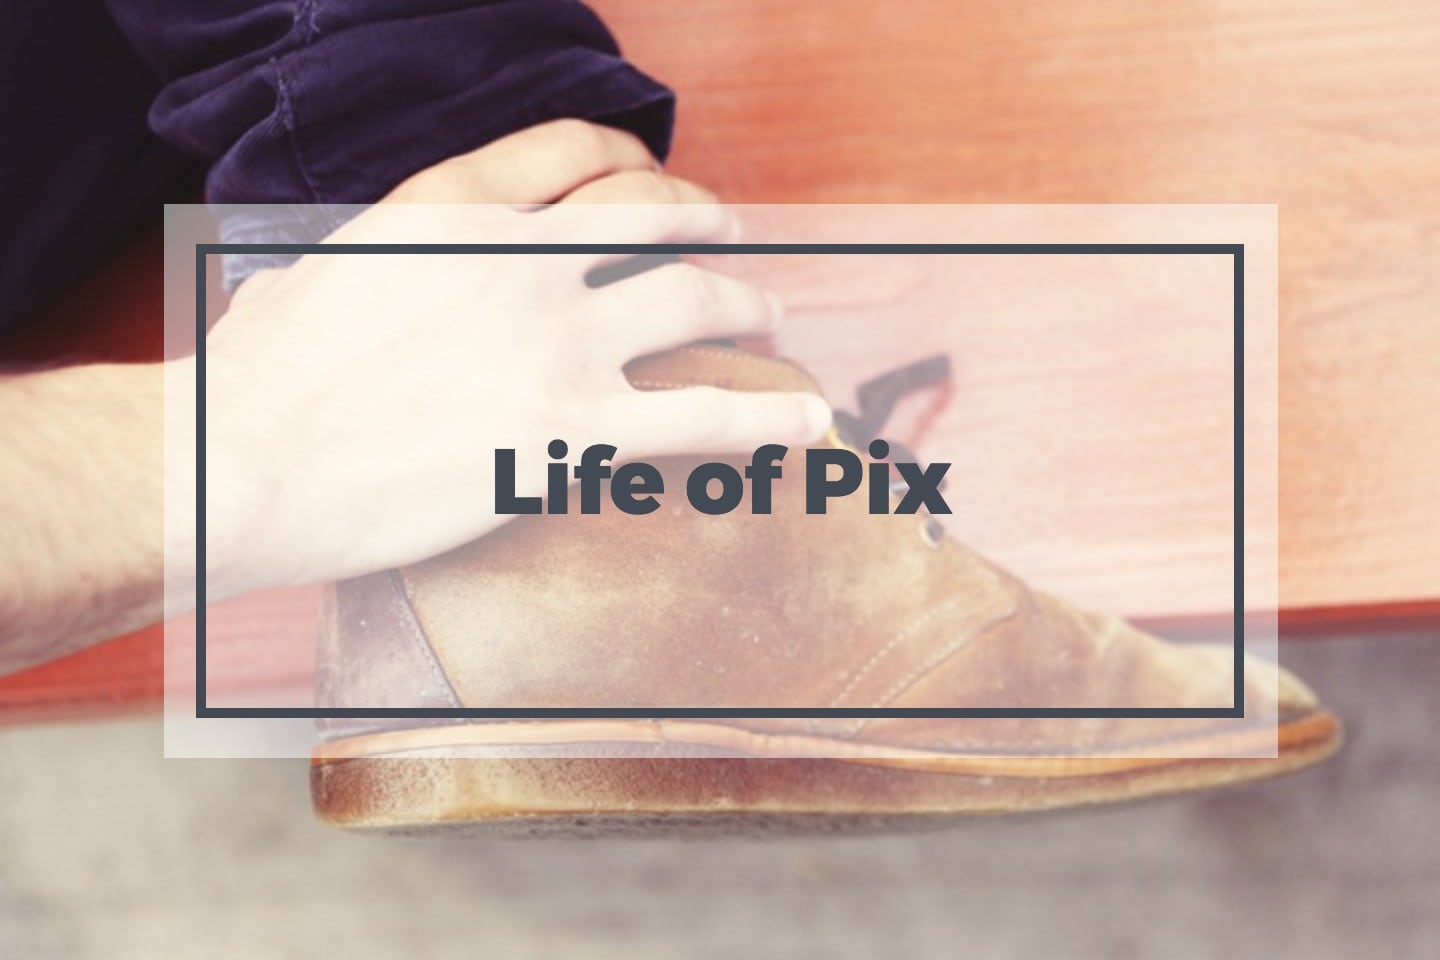 Life of Pix free stock photos